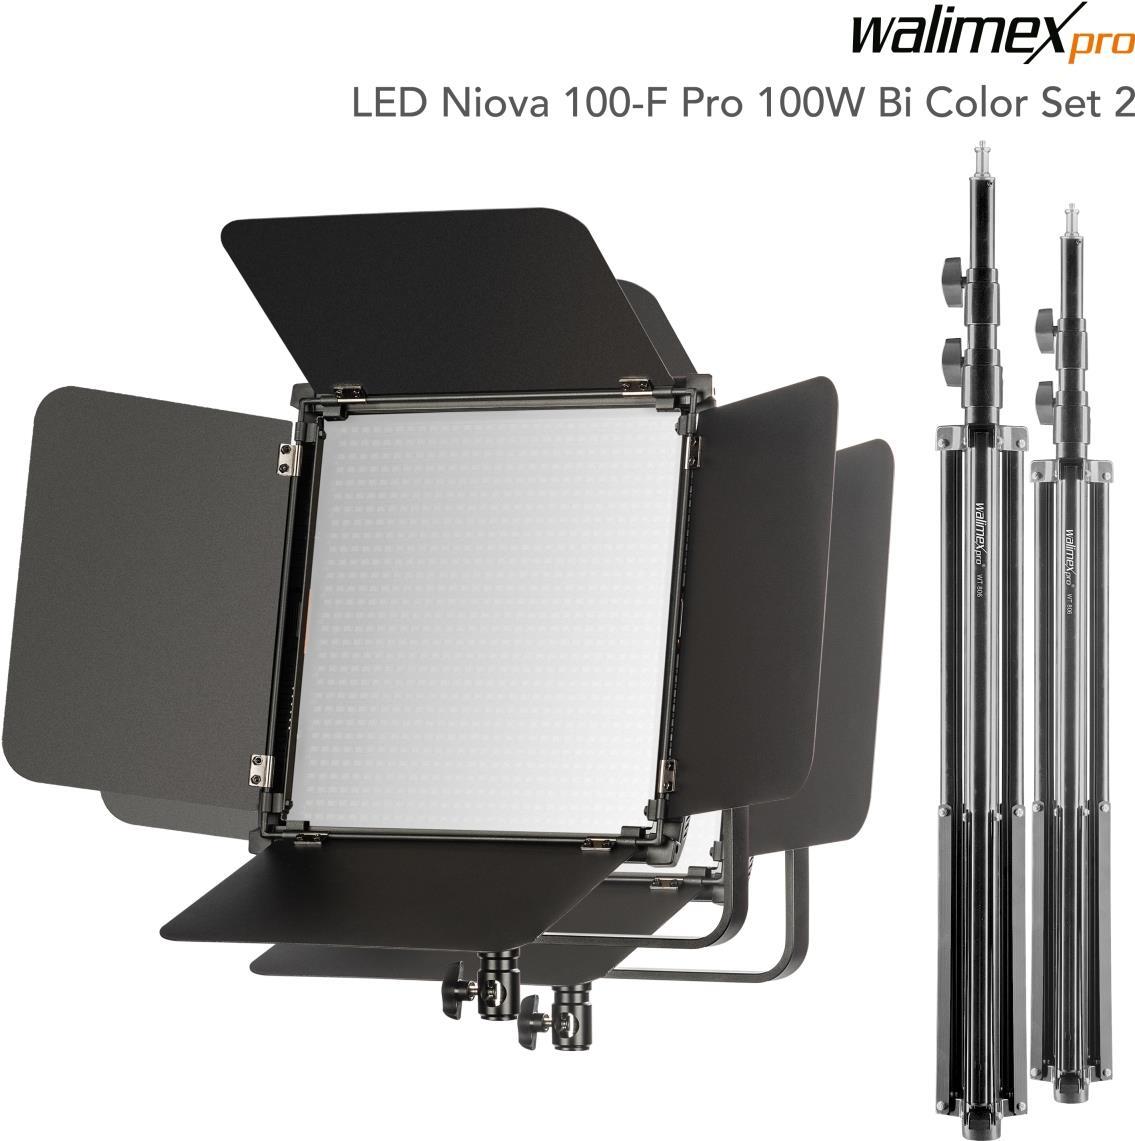 WALSER Walimex pro LED Niova 100-F Pro 100W Bi Color Set2 (23217)